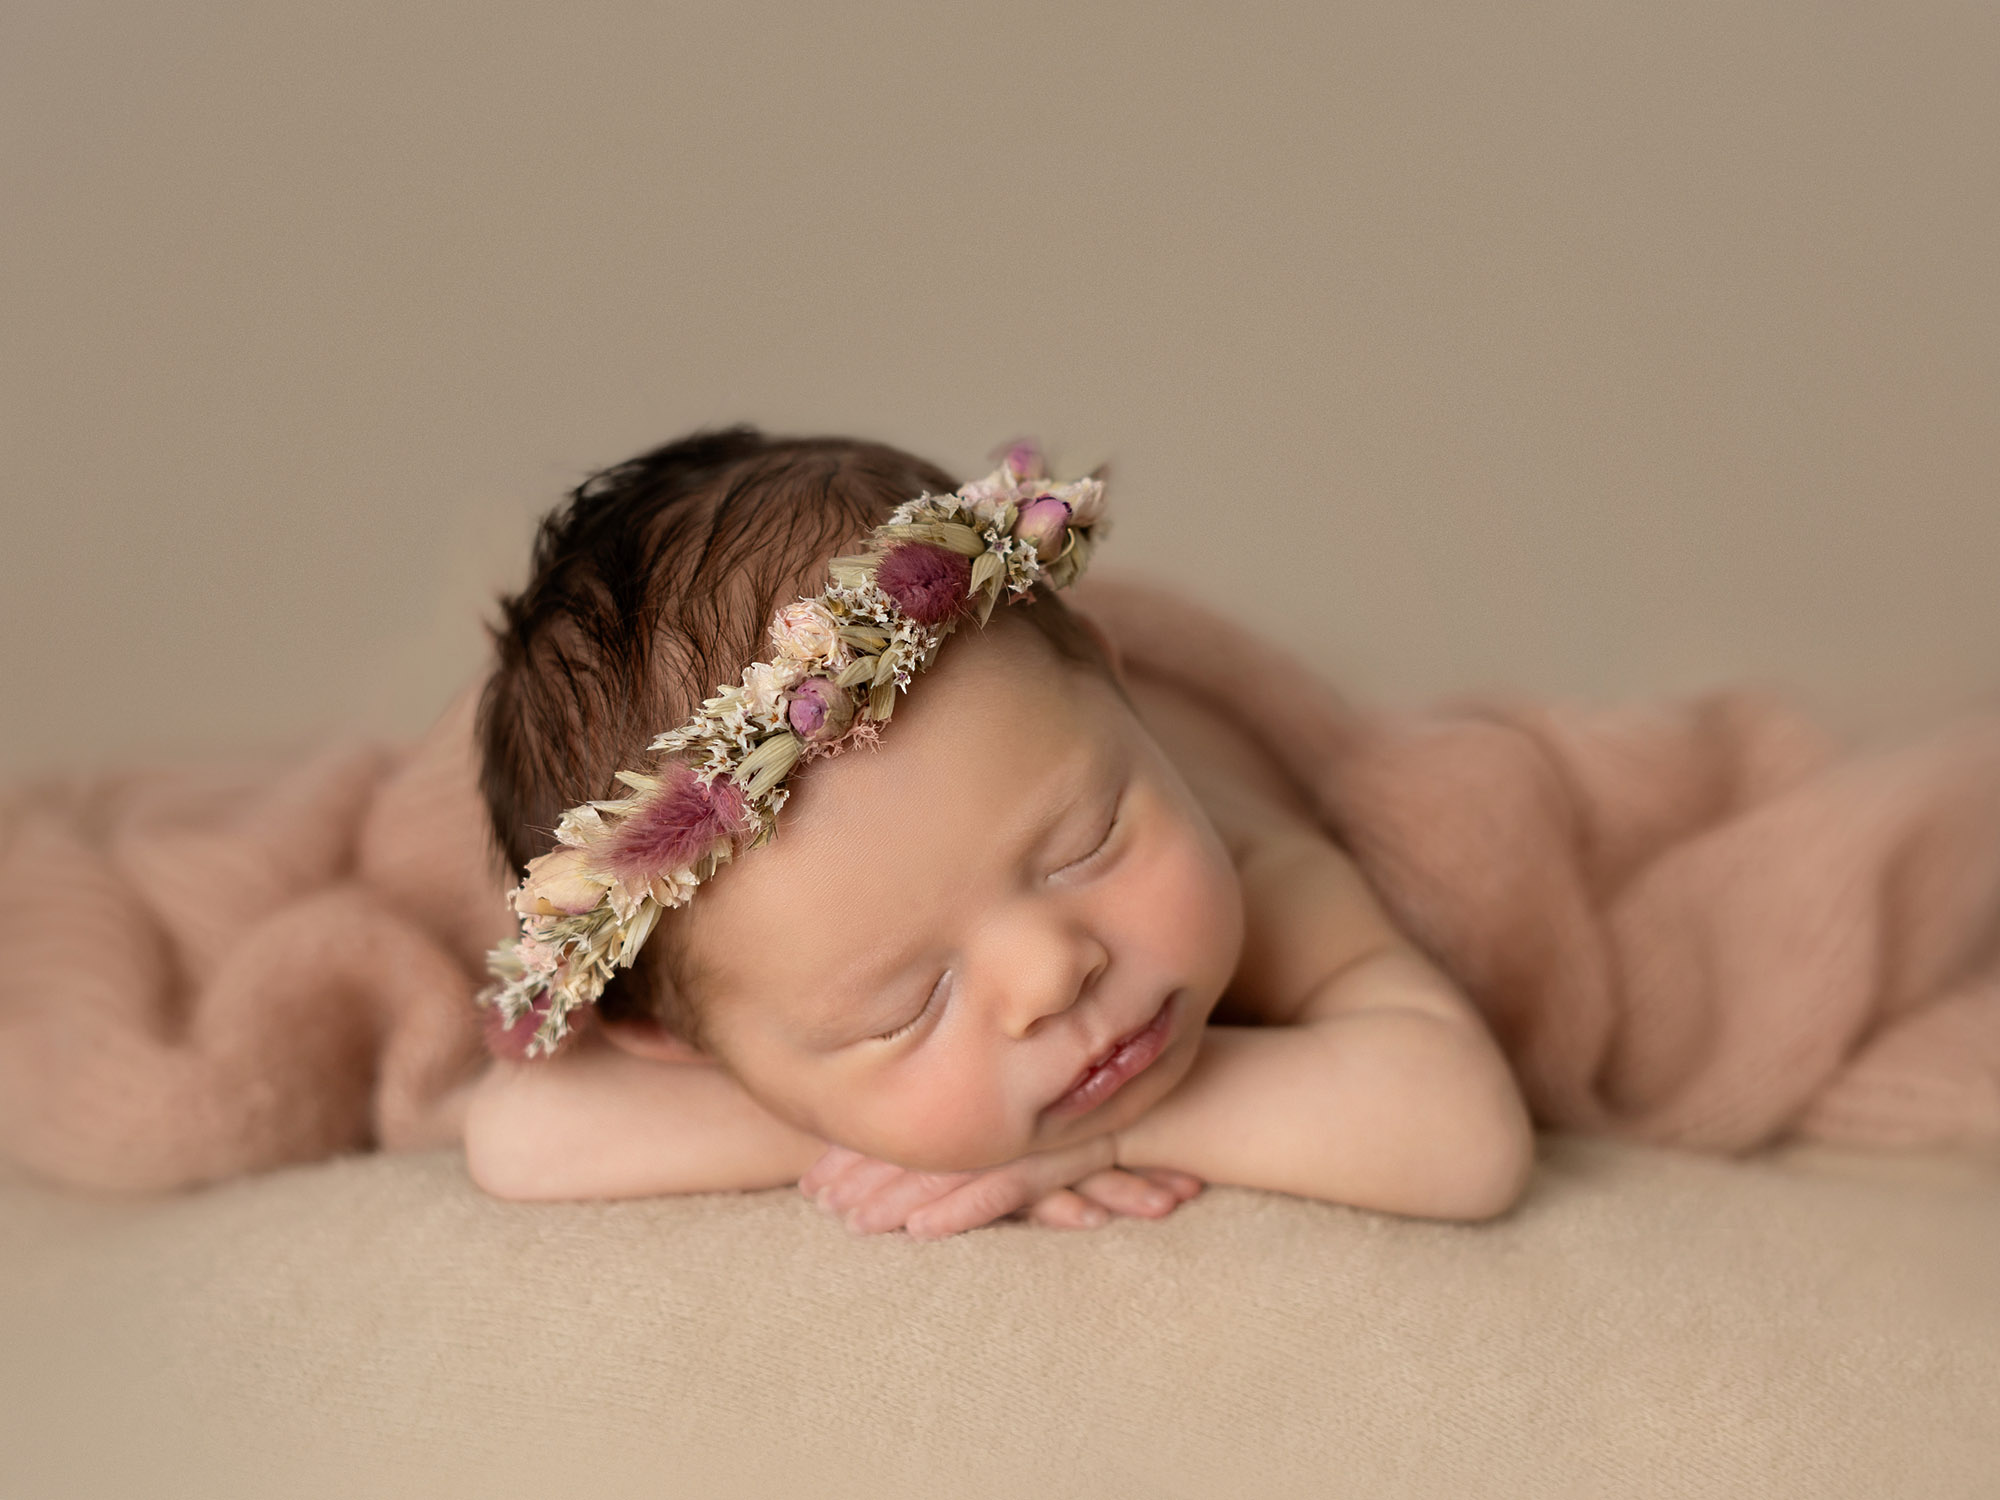 newborn head on hands pose by newborn photographer in Guildford, Surrey